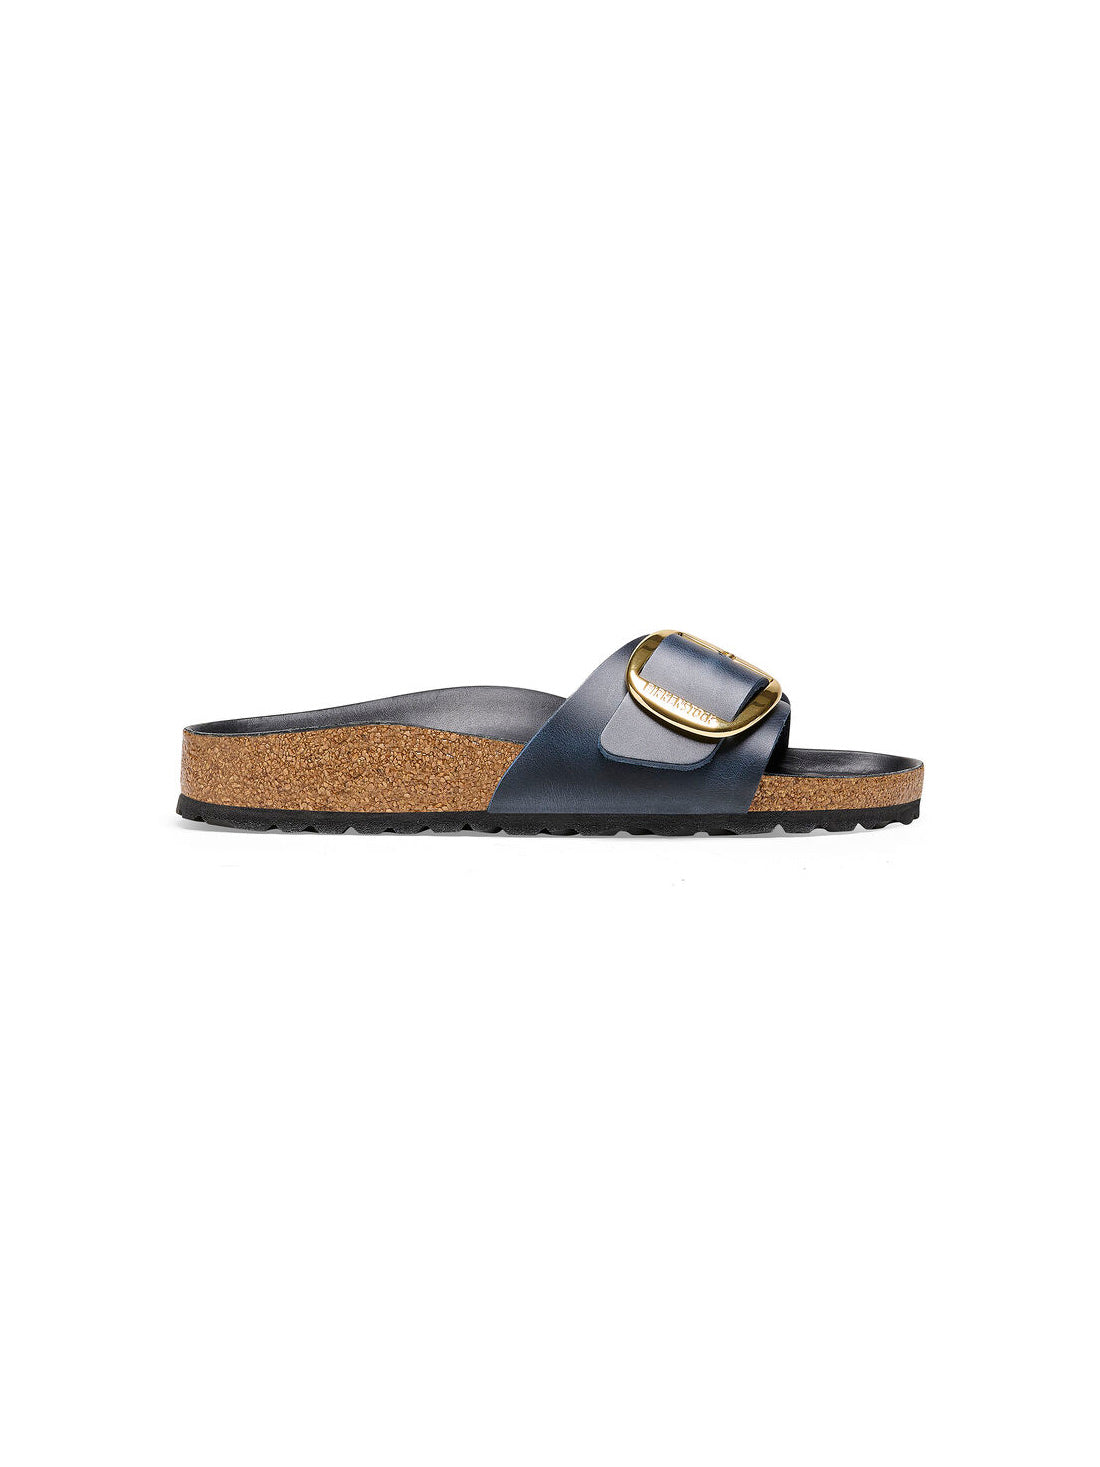 birkenstock madrid big buckle sandal in blue oiled leather narrow